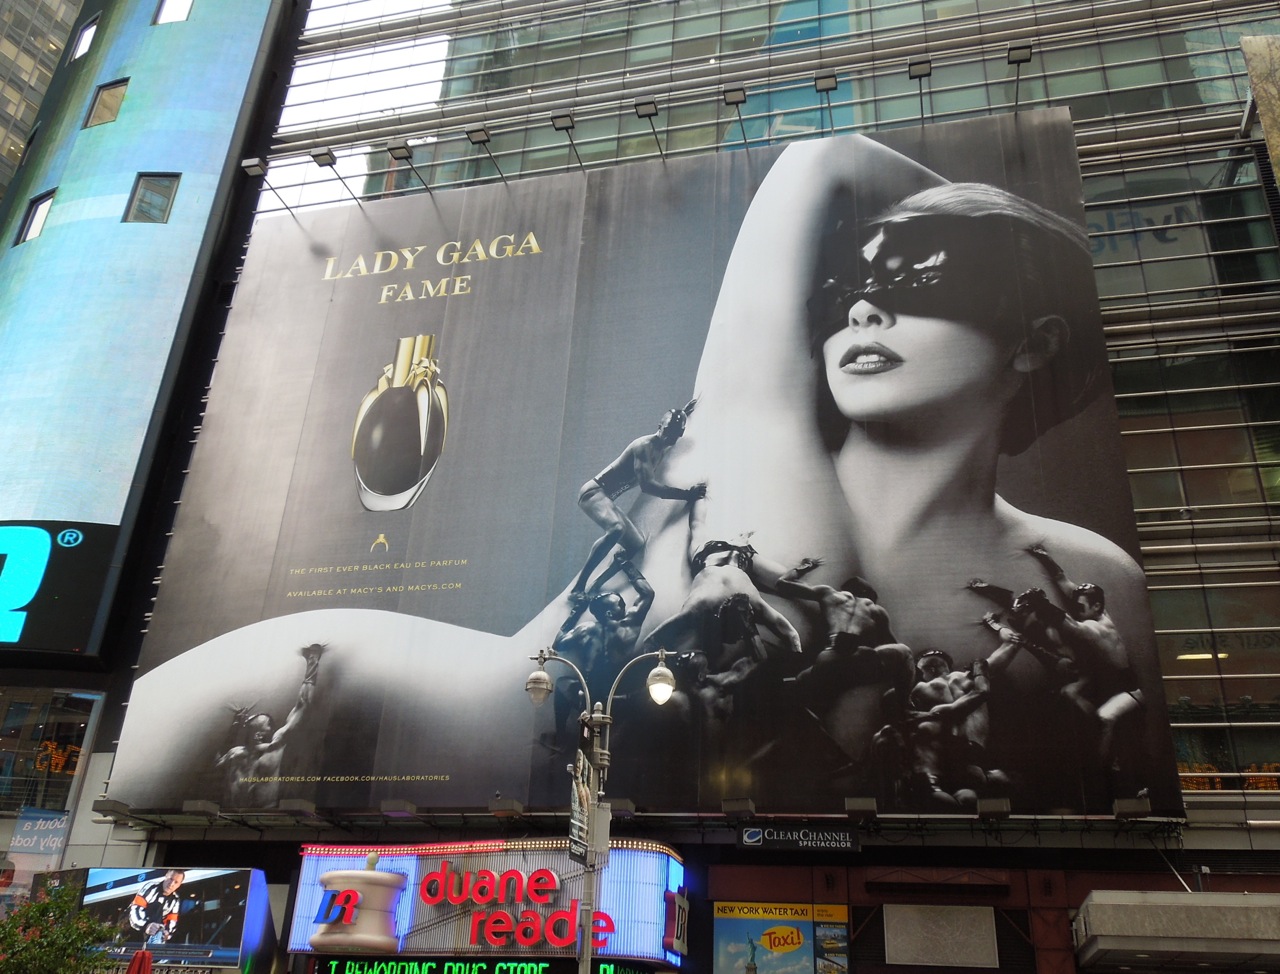 Lady Gaga Perfume Advertisement